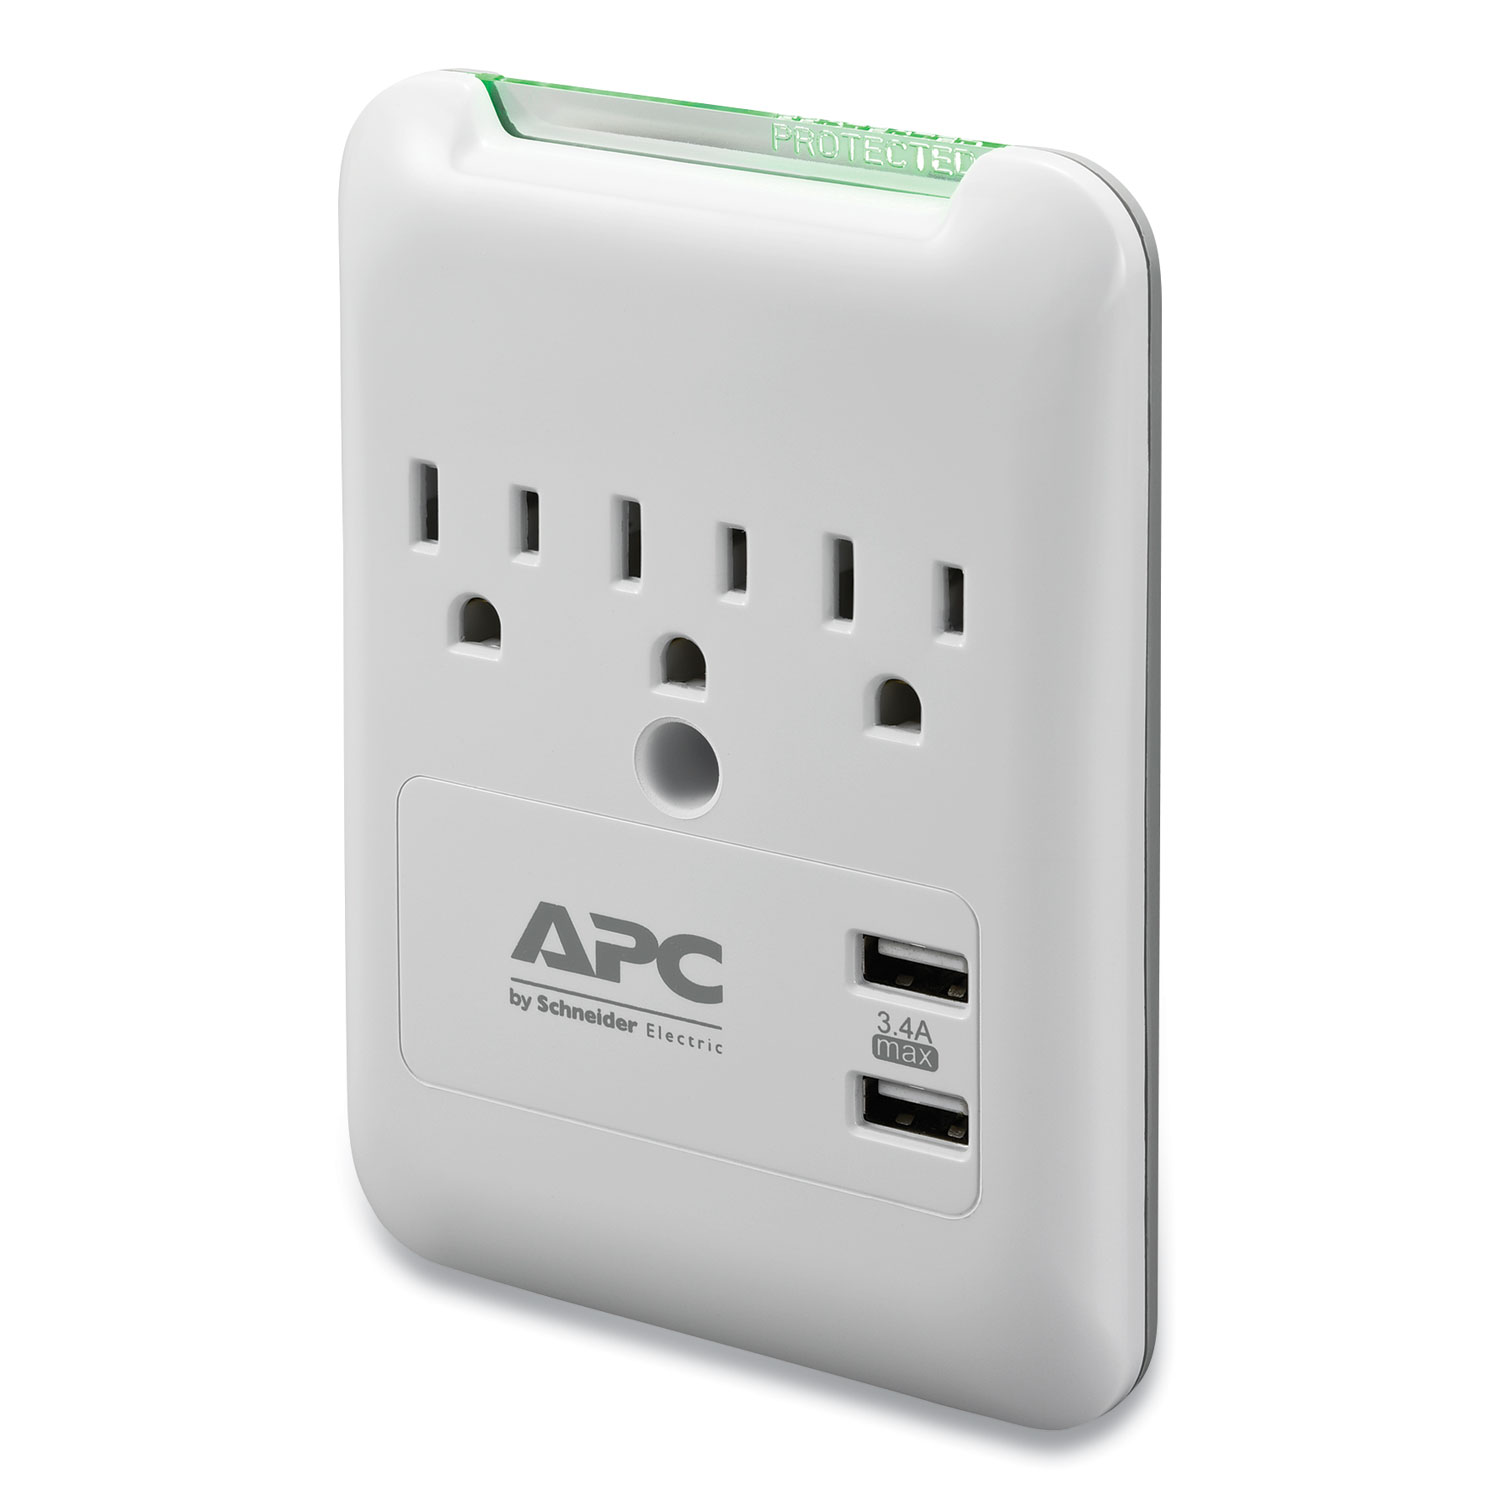 APC® SurgeArrest Wall-Mount Surge Protector, 3 AC Outlets, 2 USB Ports, 540 J, White